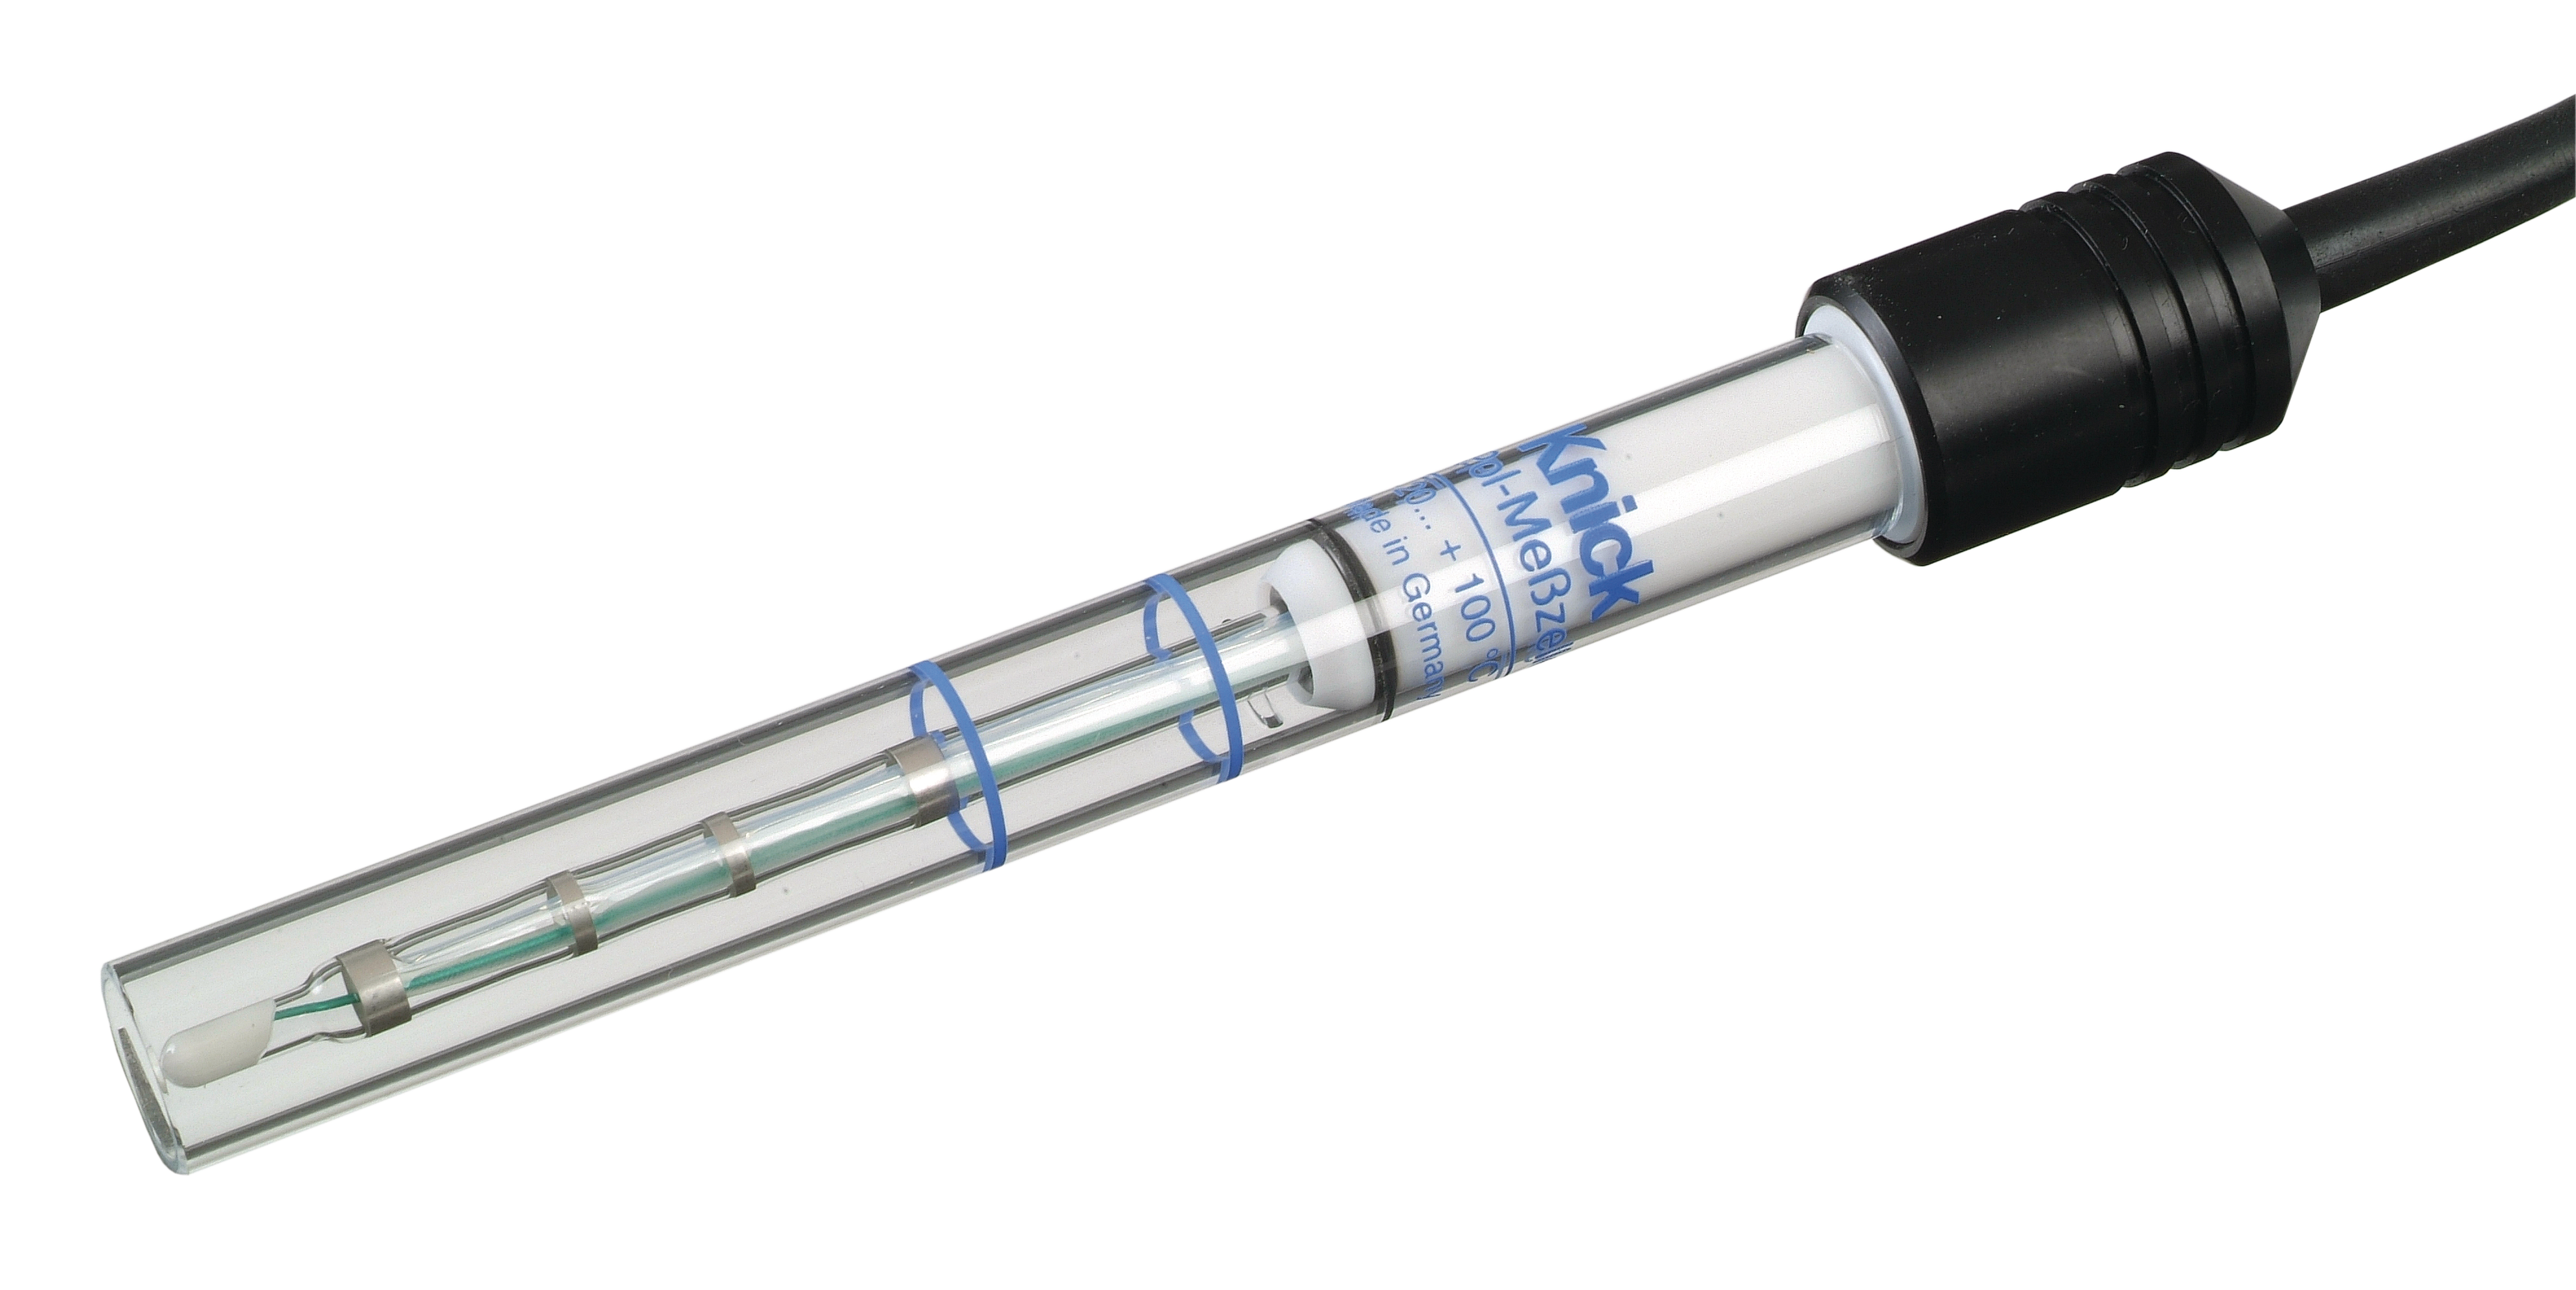 ZU6985 4-Electrode Conductivity Sensor | Glass Tube | Large measuring range 1 μS/cm ... 1 S/cm